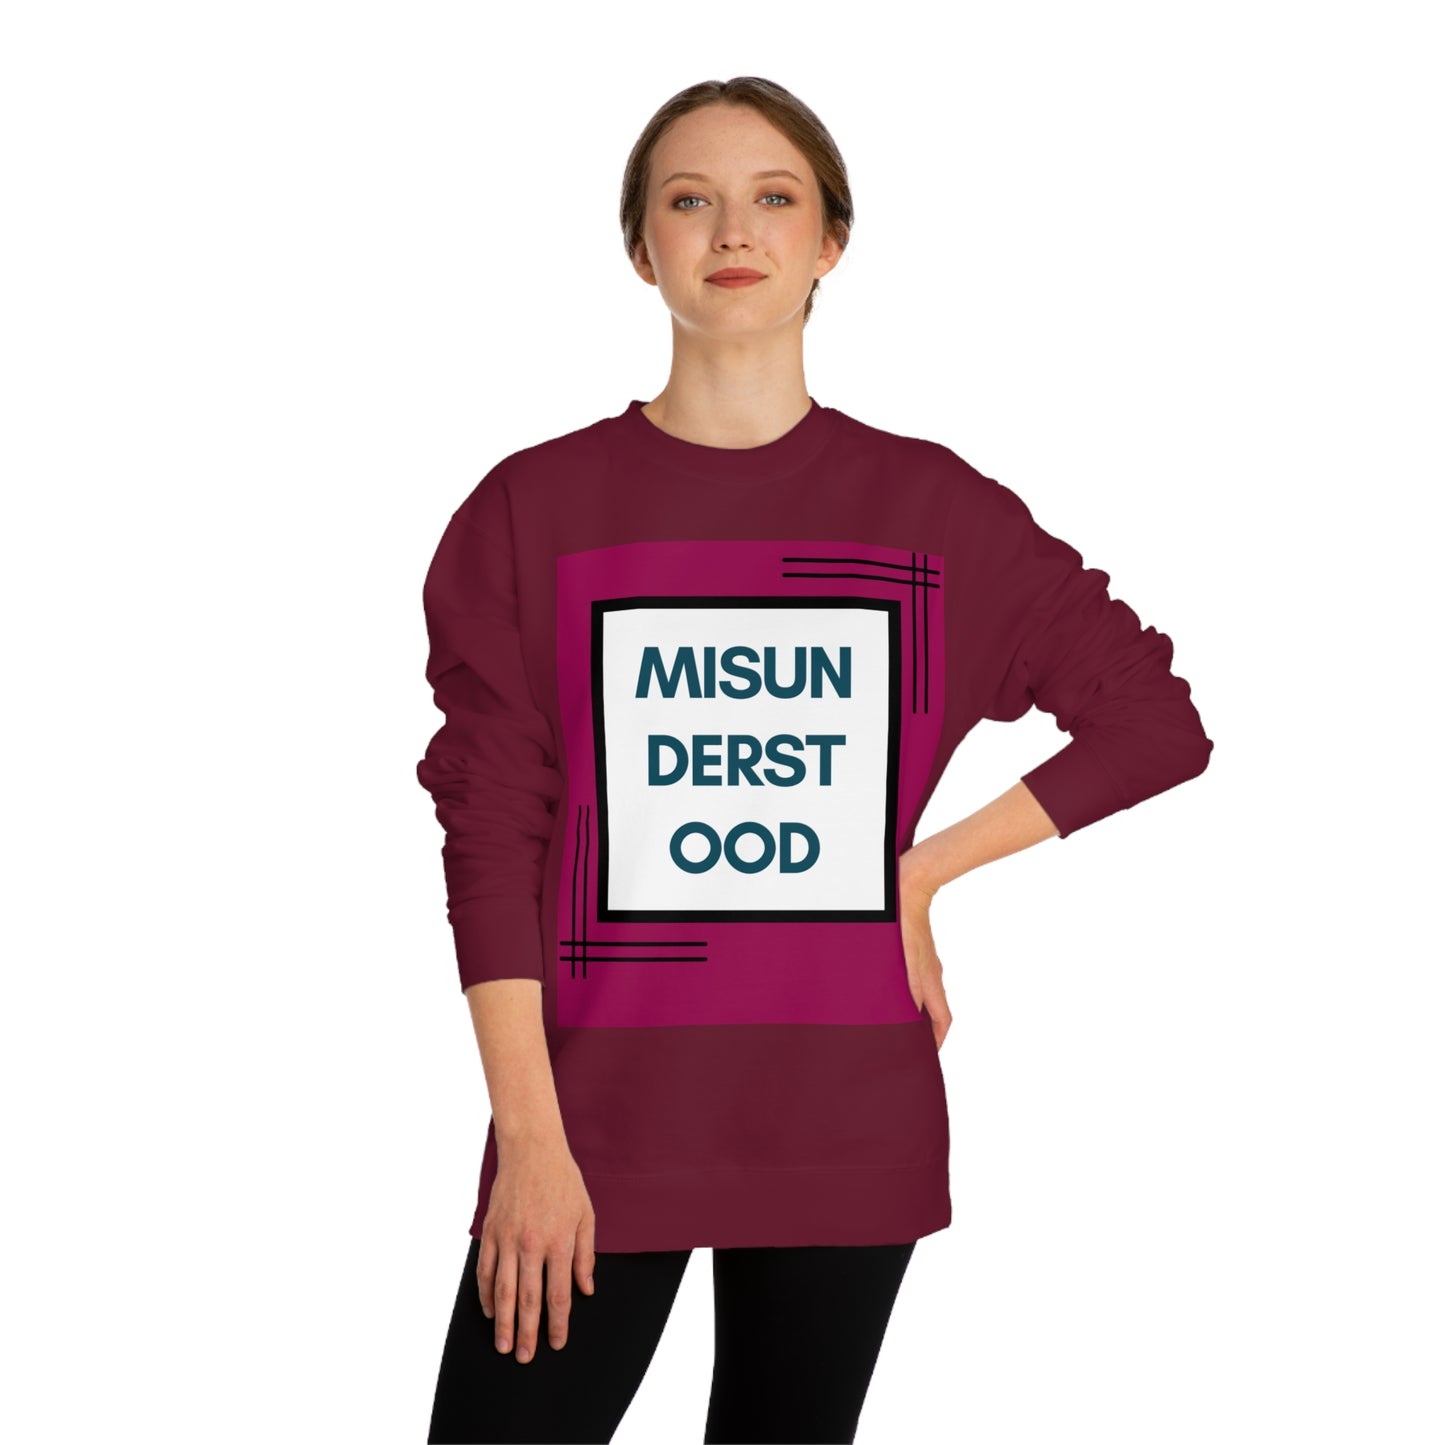 "Misunderstood" Ironic Sweater